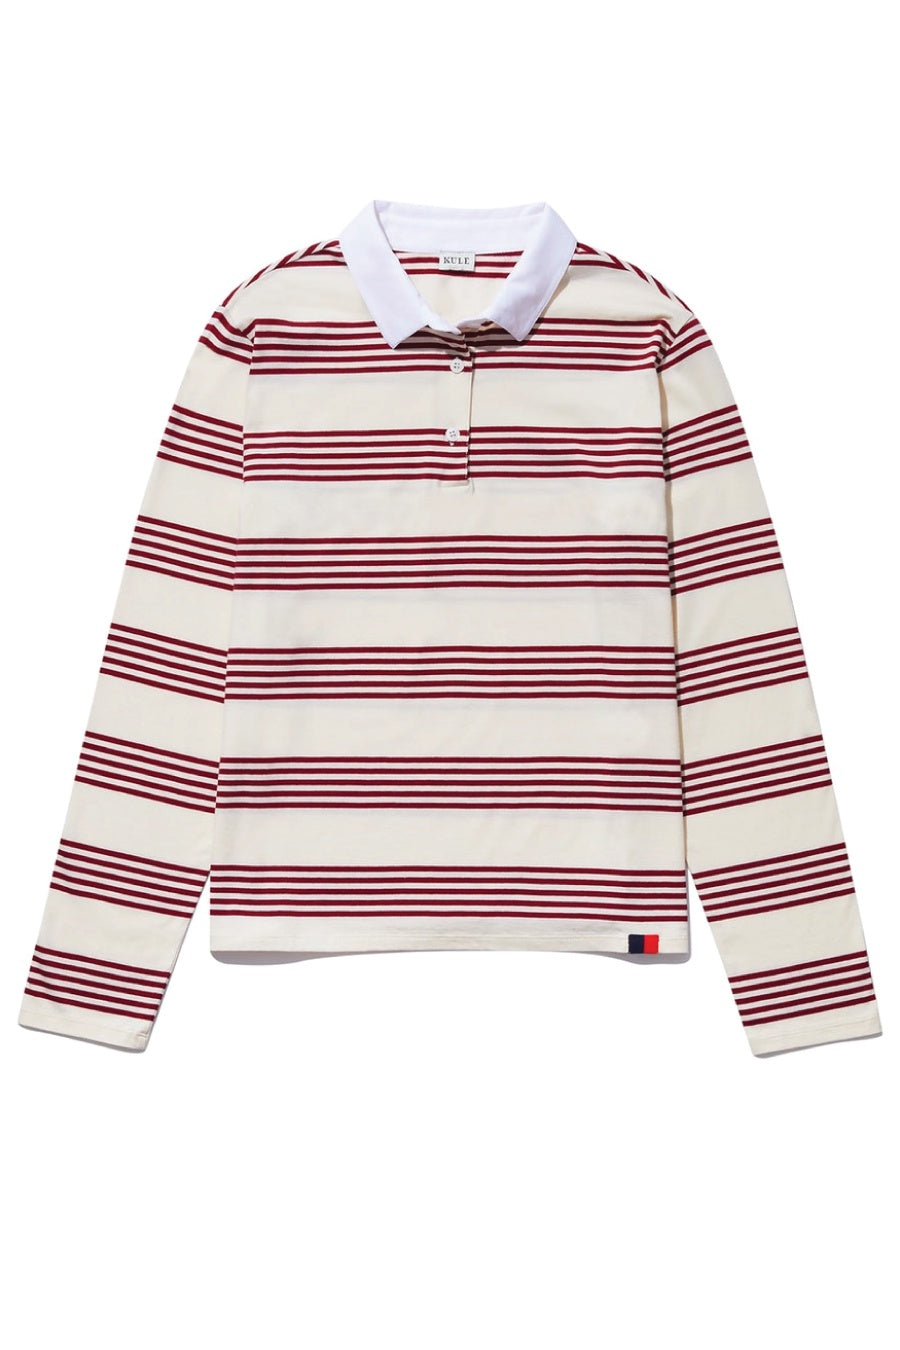 Kule The Rugby Striped Sweatshirt - Cream/ Port